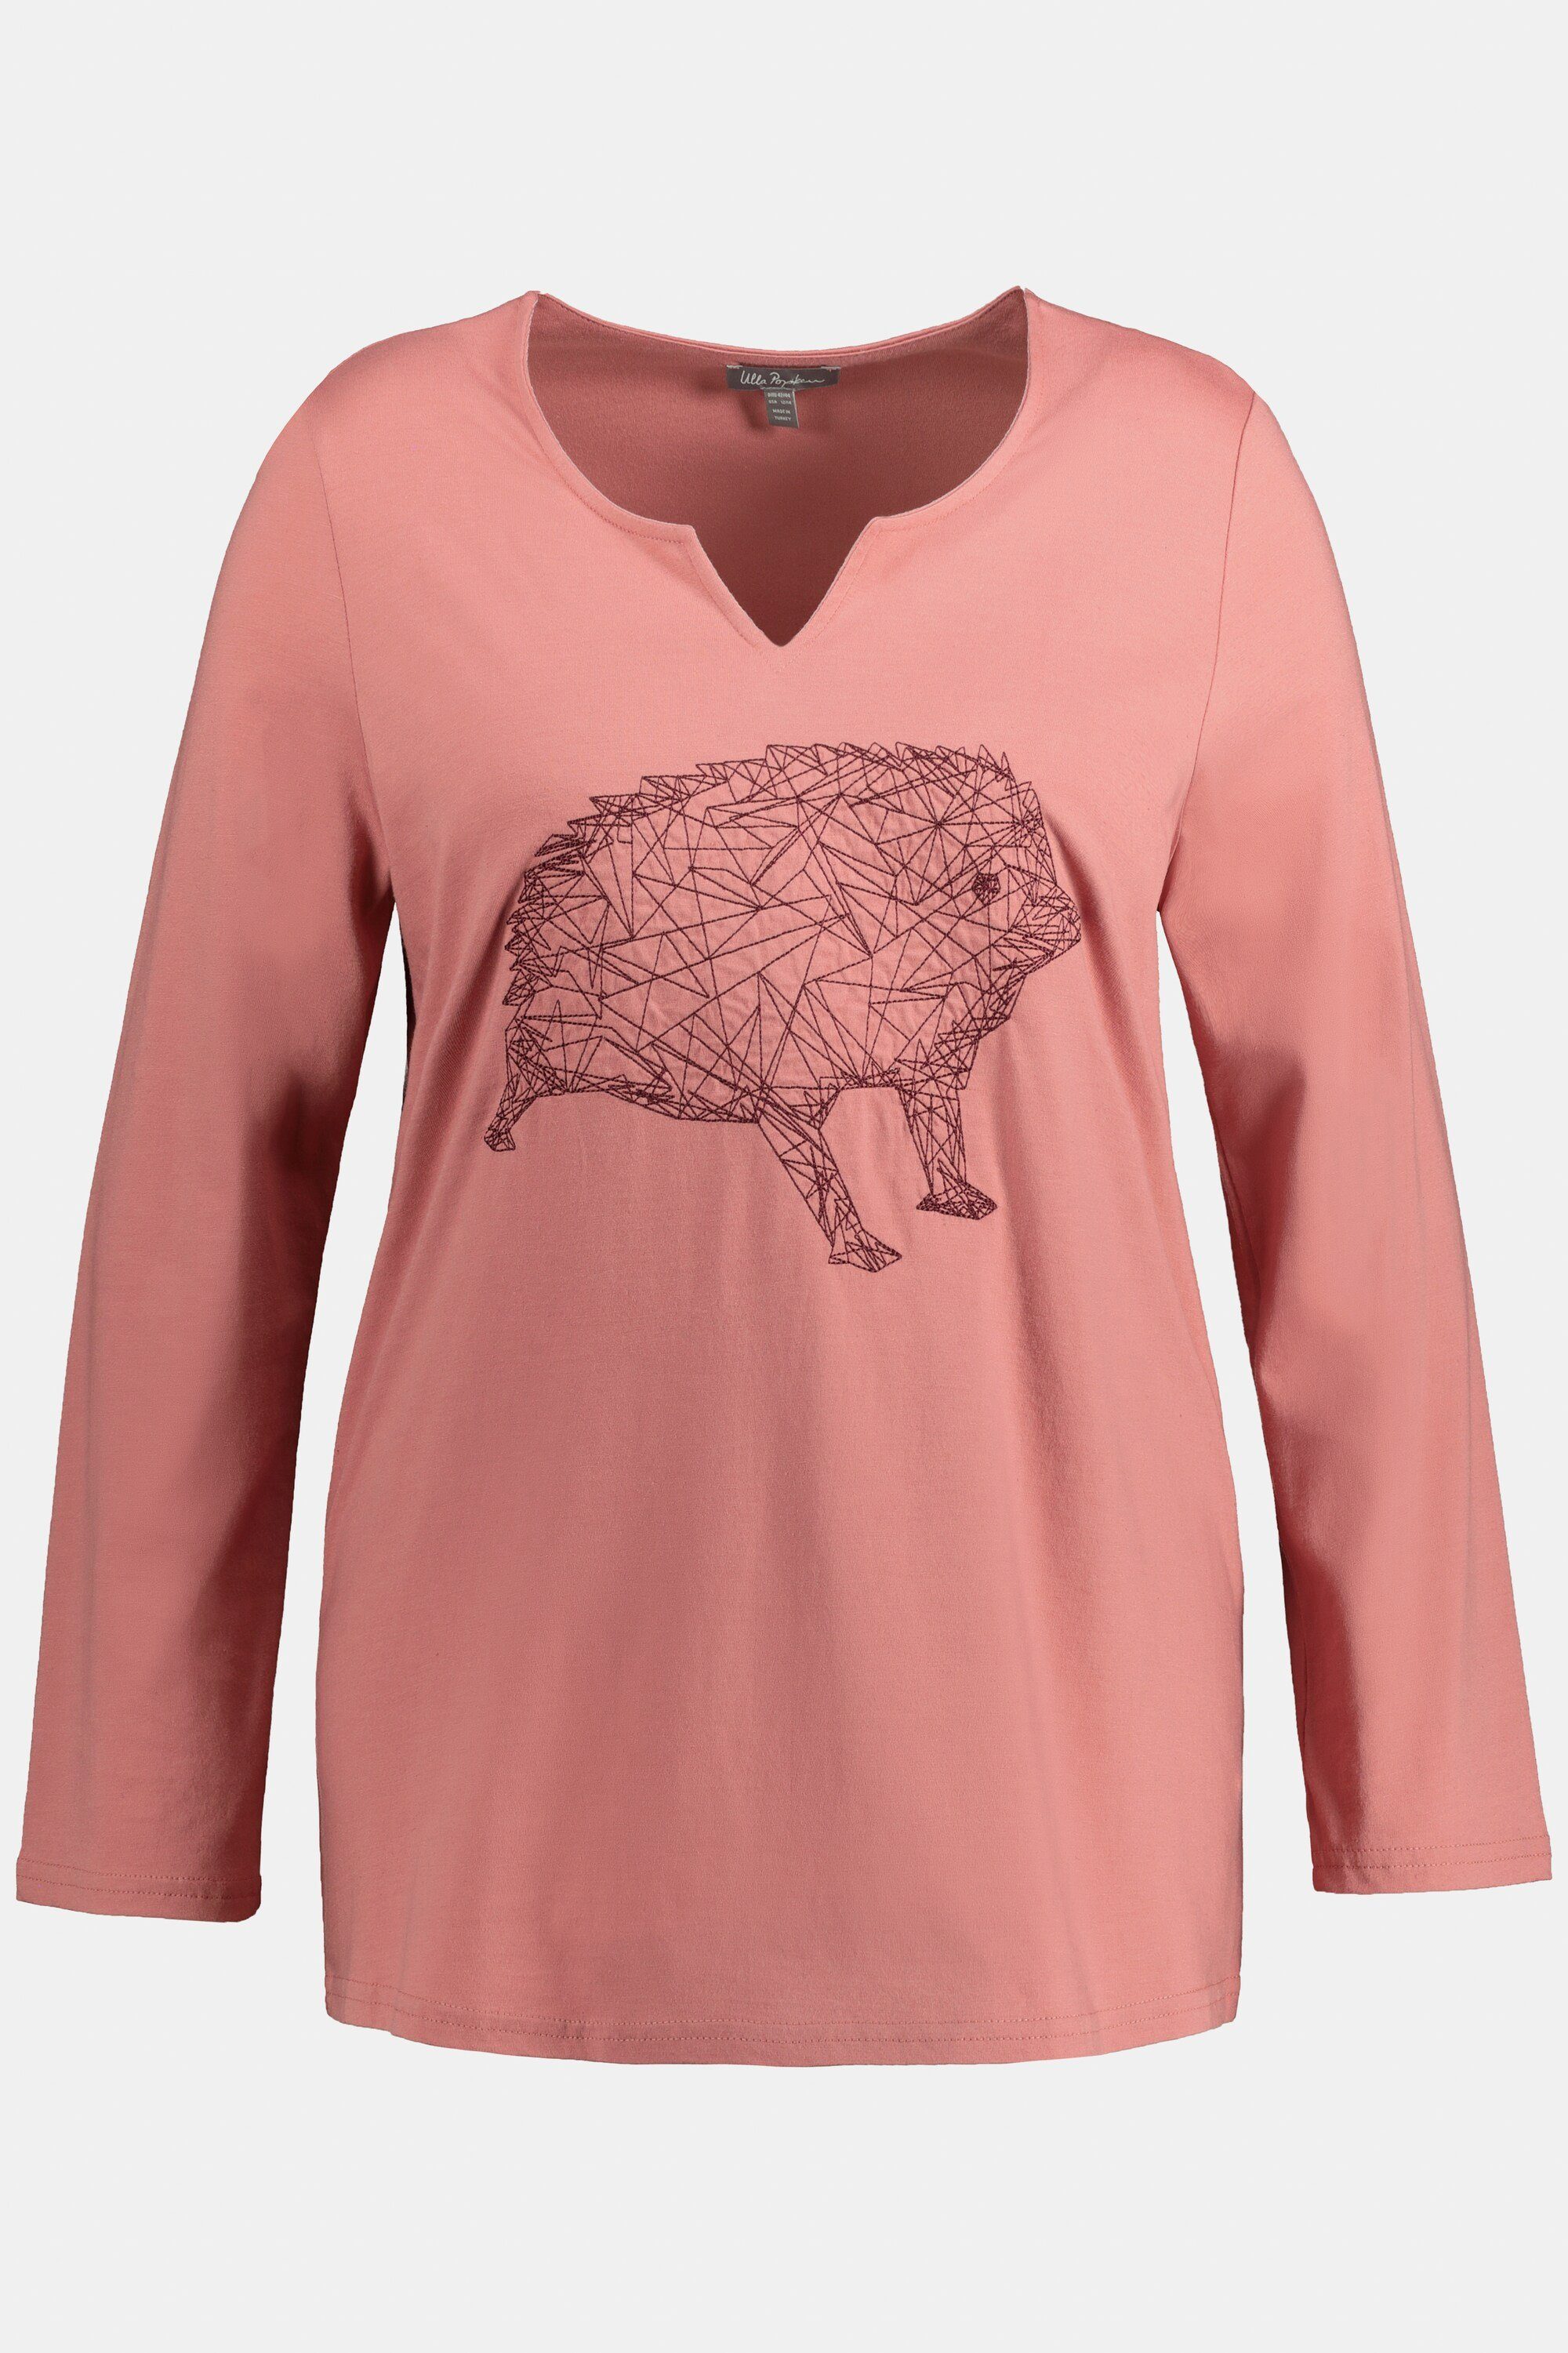 rosequartz Popken Rundhalsshirt Langarm Ulla Modal Tunika-Ausschnitt Tiermotiv Shirt